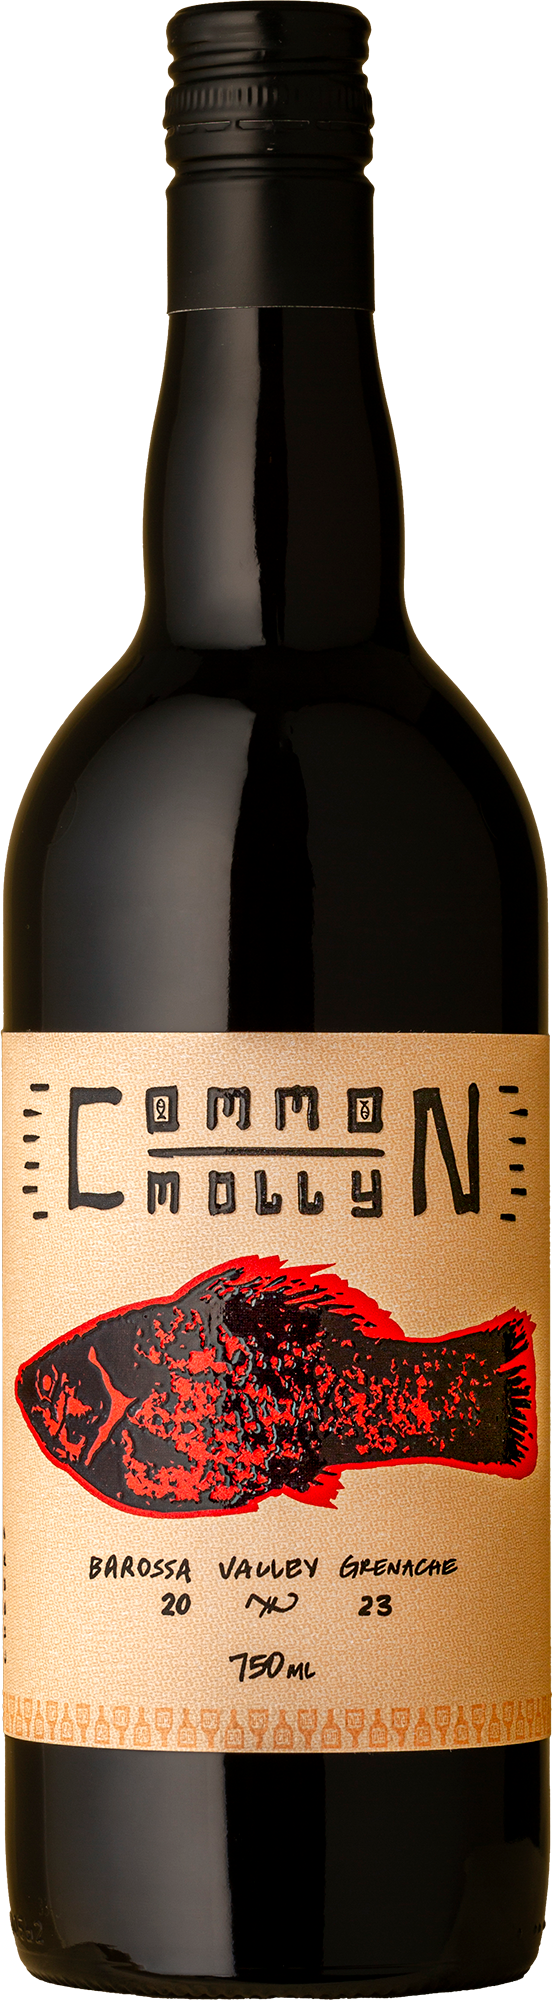 Common Molly - Barossa Valley Grenache 2022 Red Wine